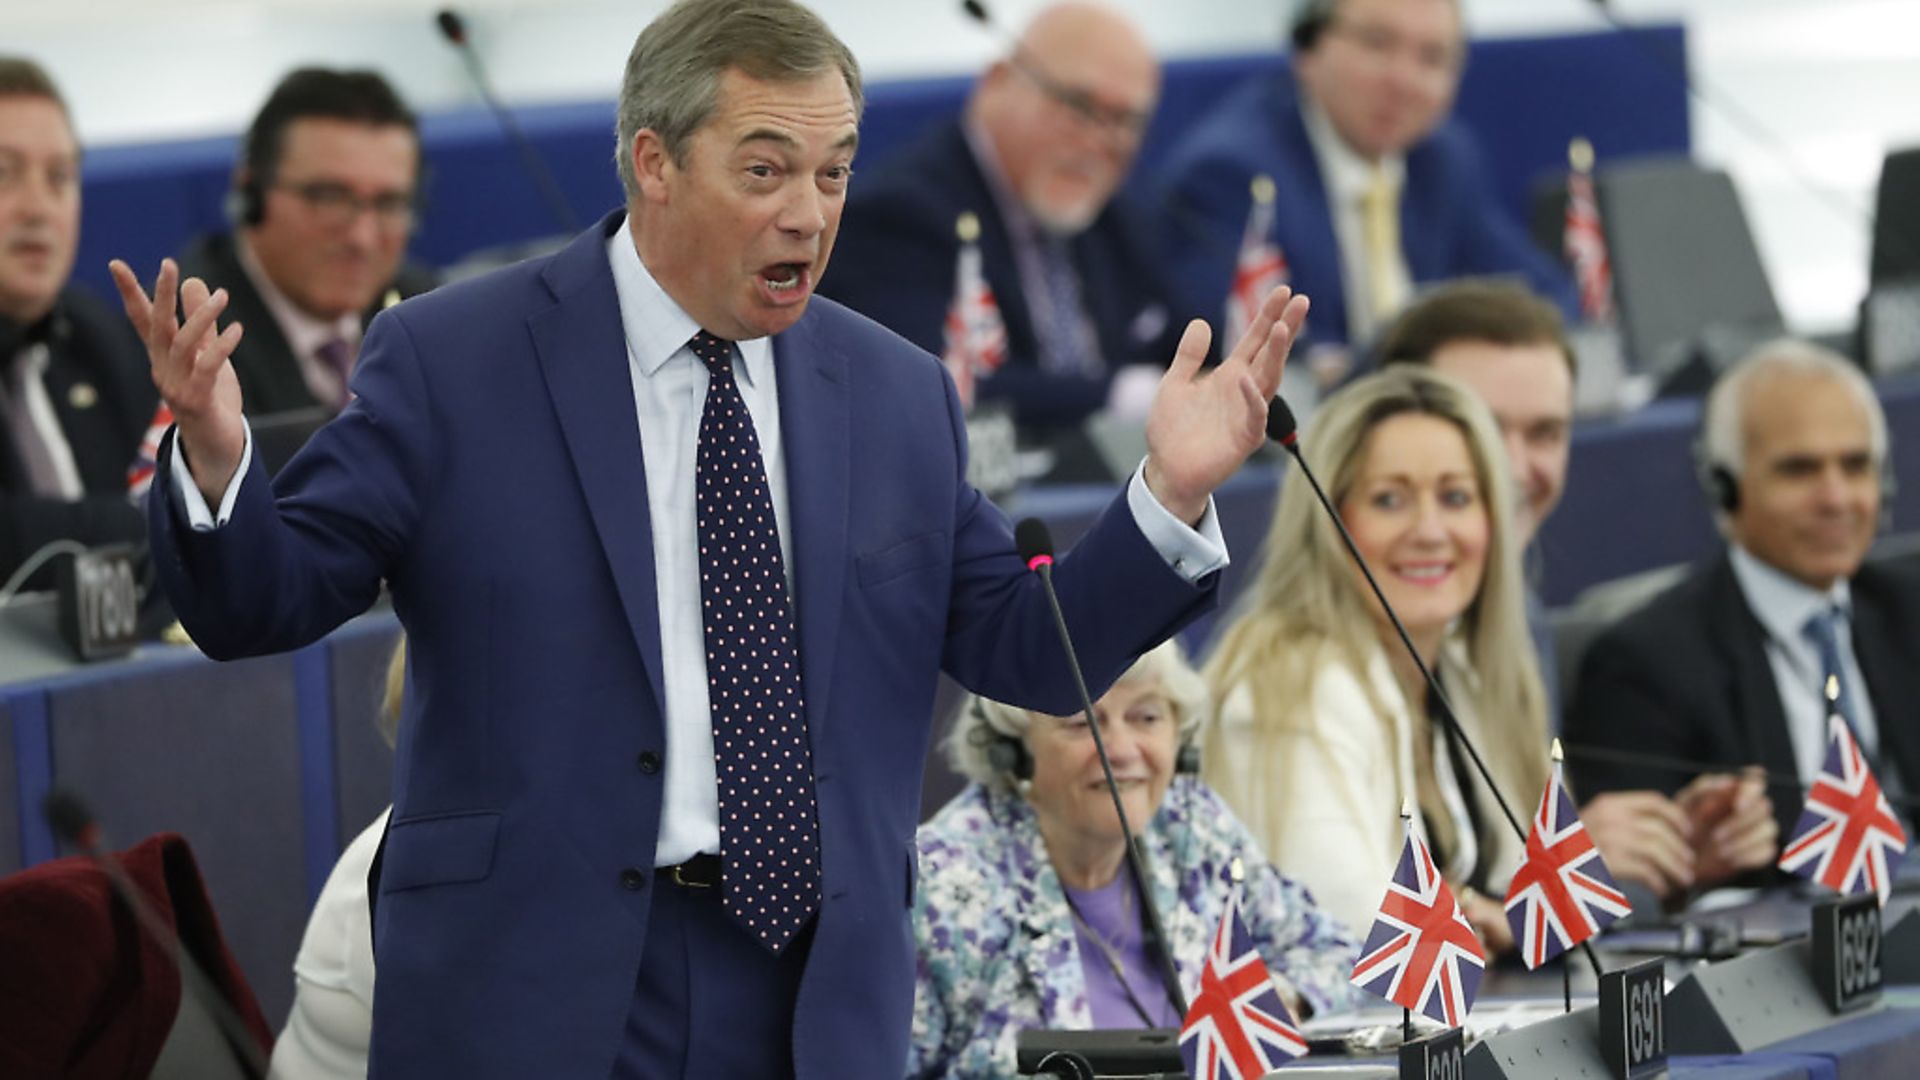 Brexit Party leader Nigel Farage delivers a speech in the European parliament. (AP Photo/Jean-Francois Badias) - Credit: AP